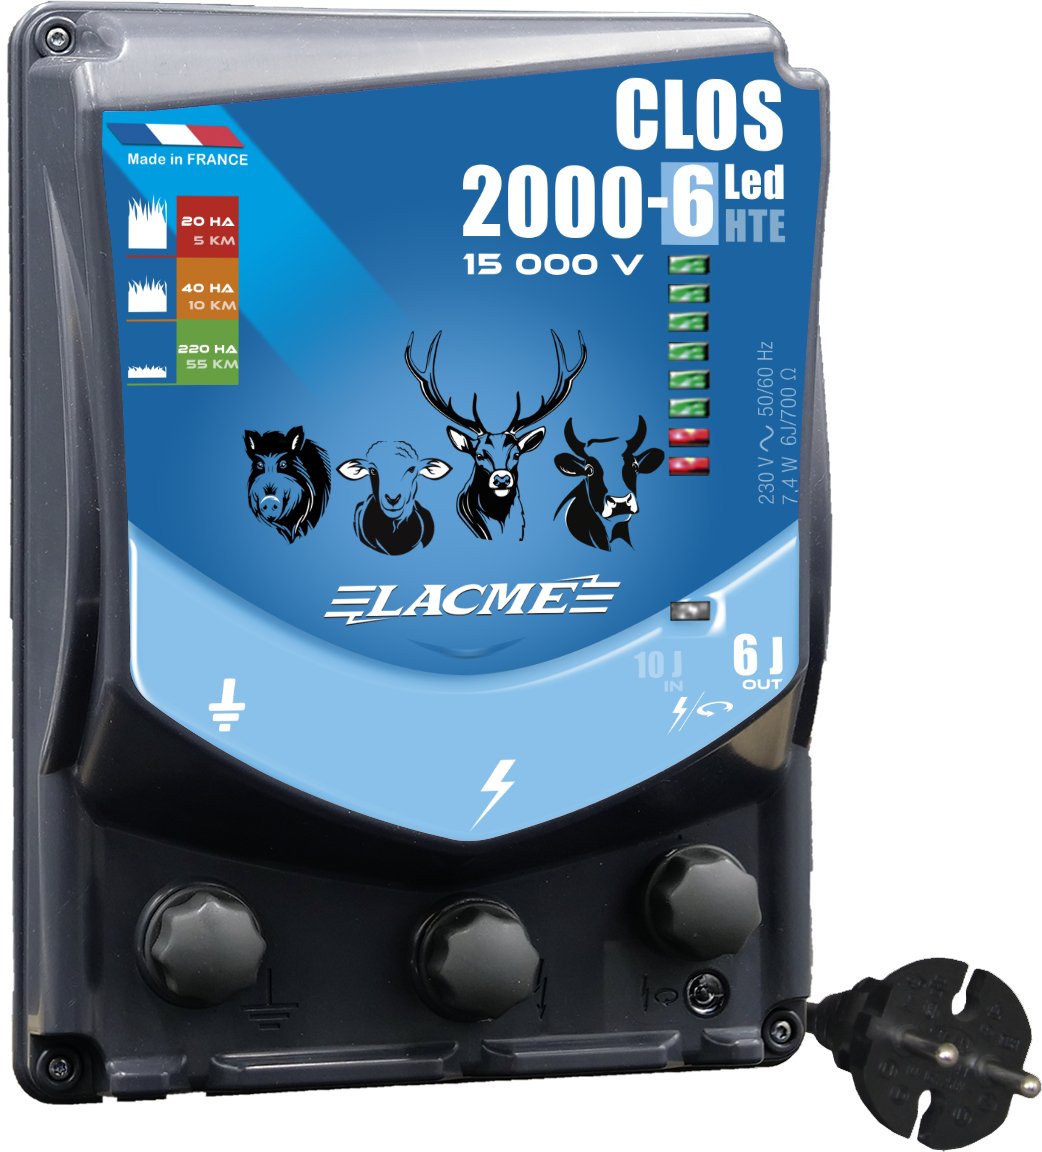 Lacmé Clos Netzgerät mit 6 Joule Leistung und Balkendiagramm